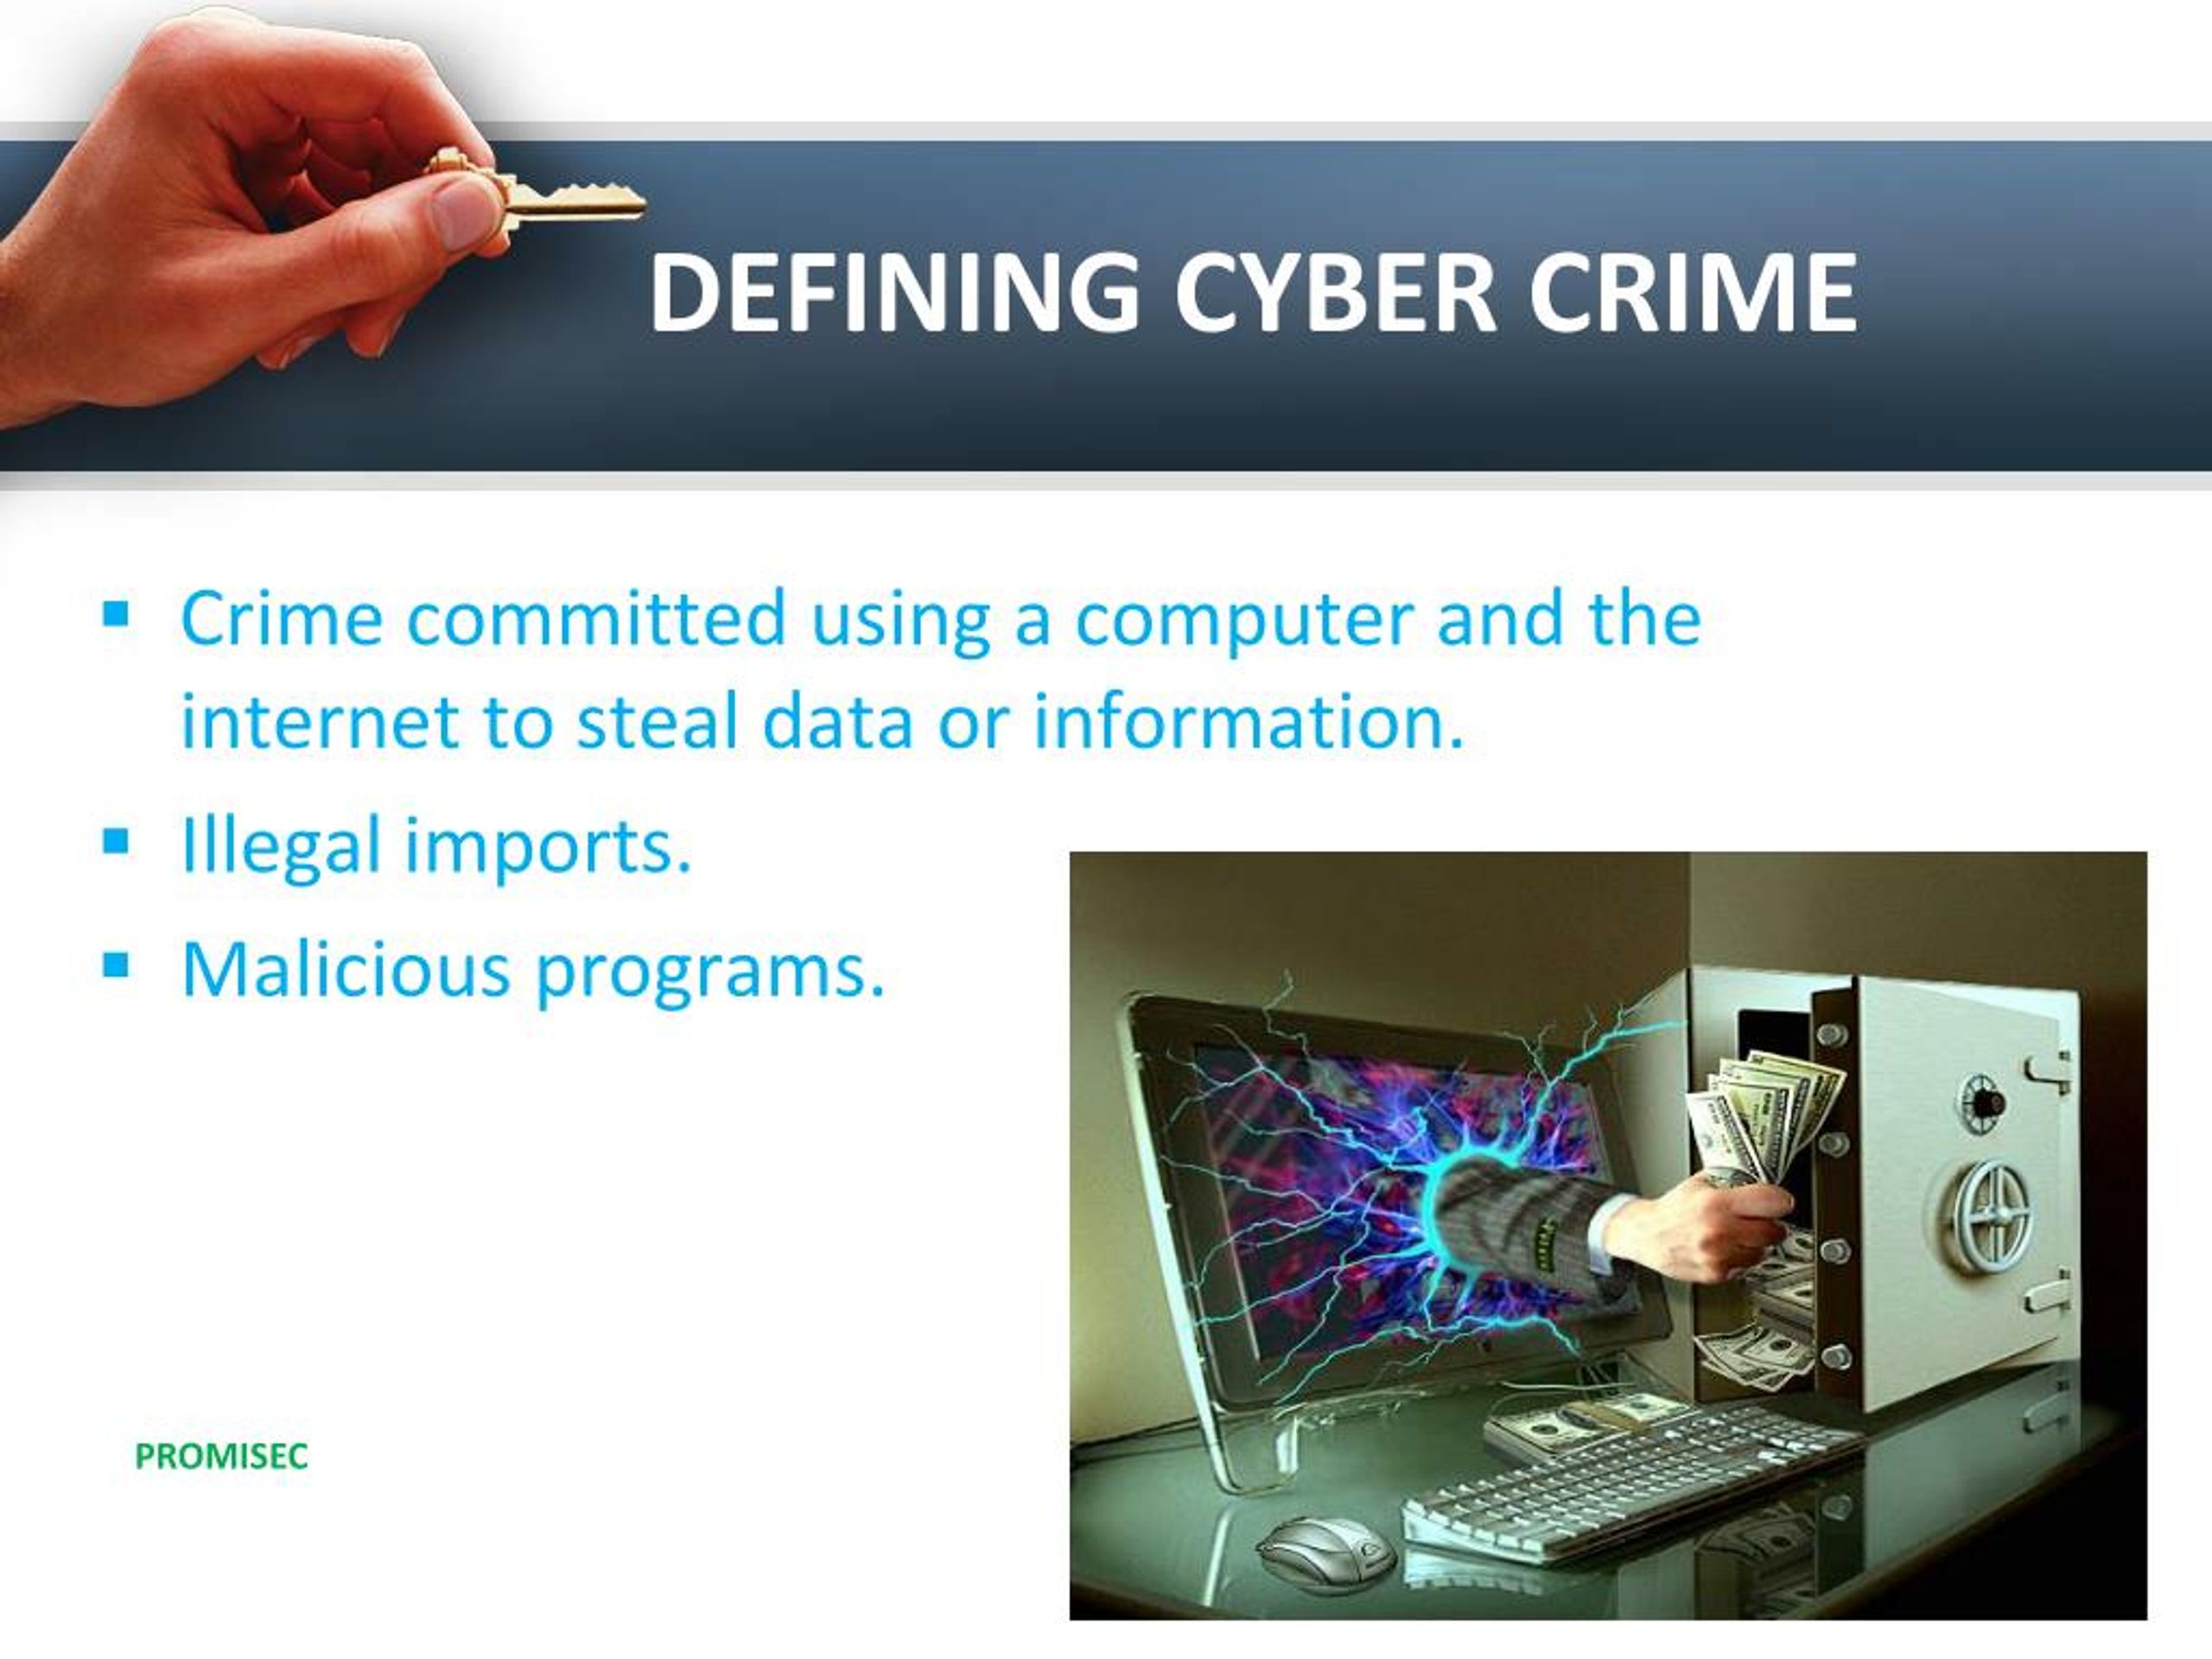 presentation on cybercrimes